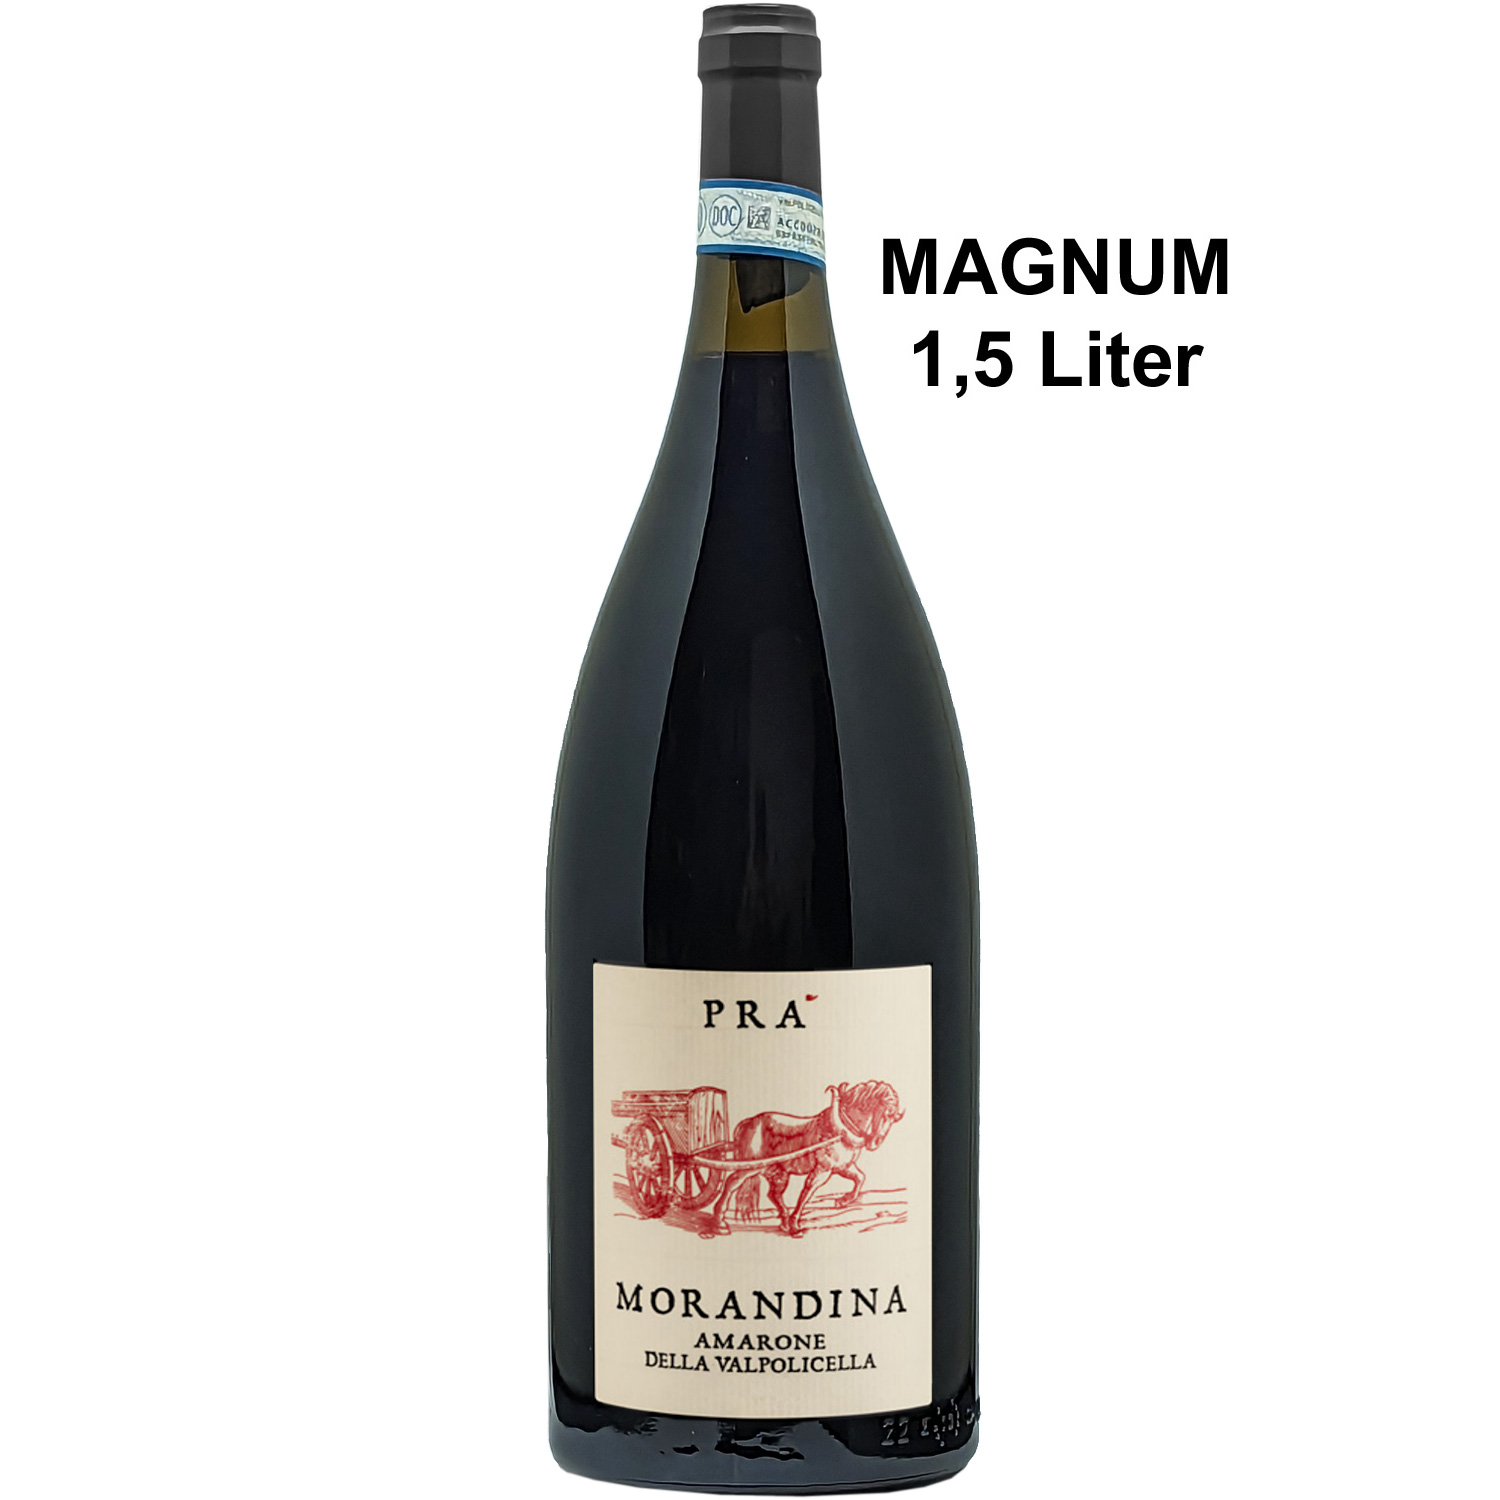 Italienischer Rotwein Morandina Amarone della Valpolicella 2016 Pra | Magnum